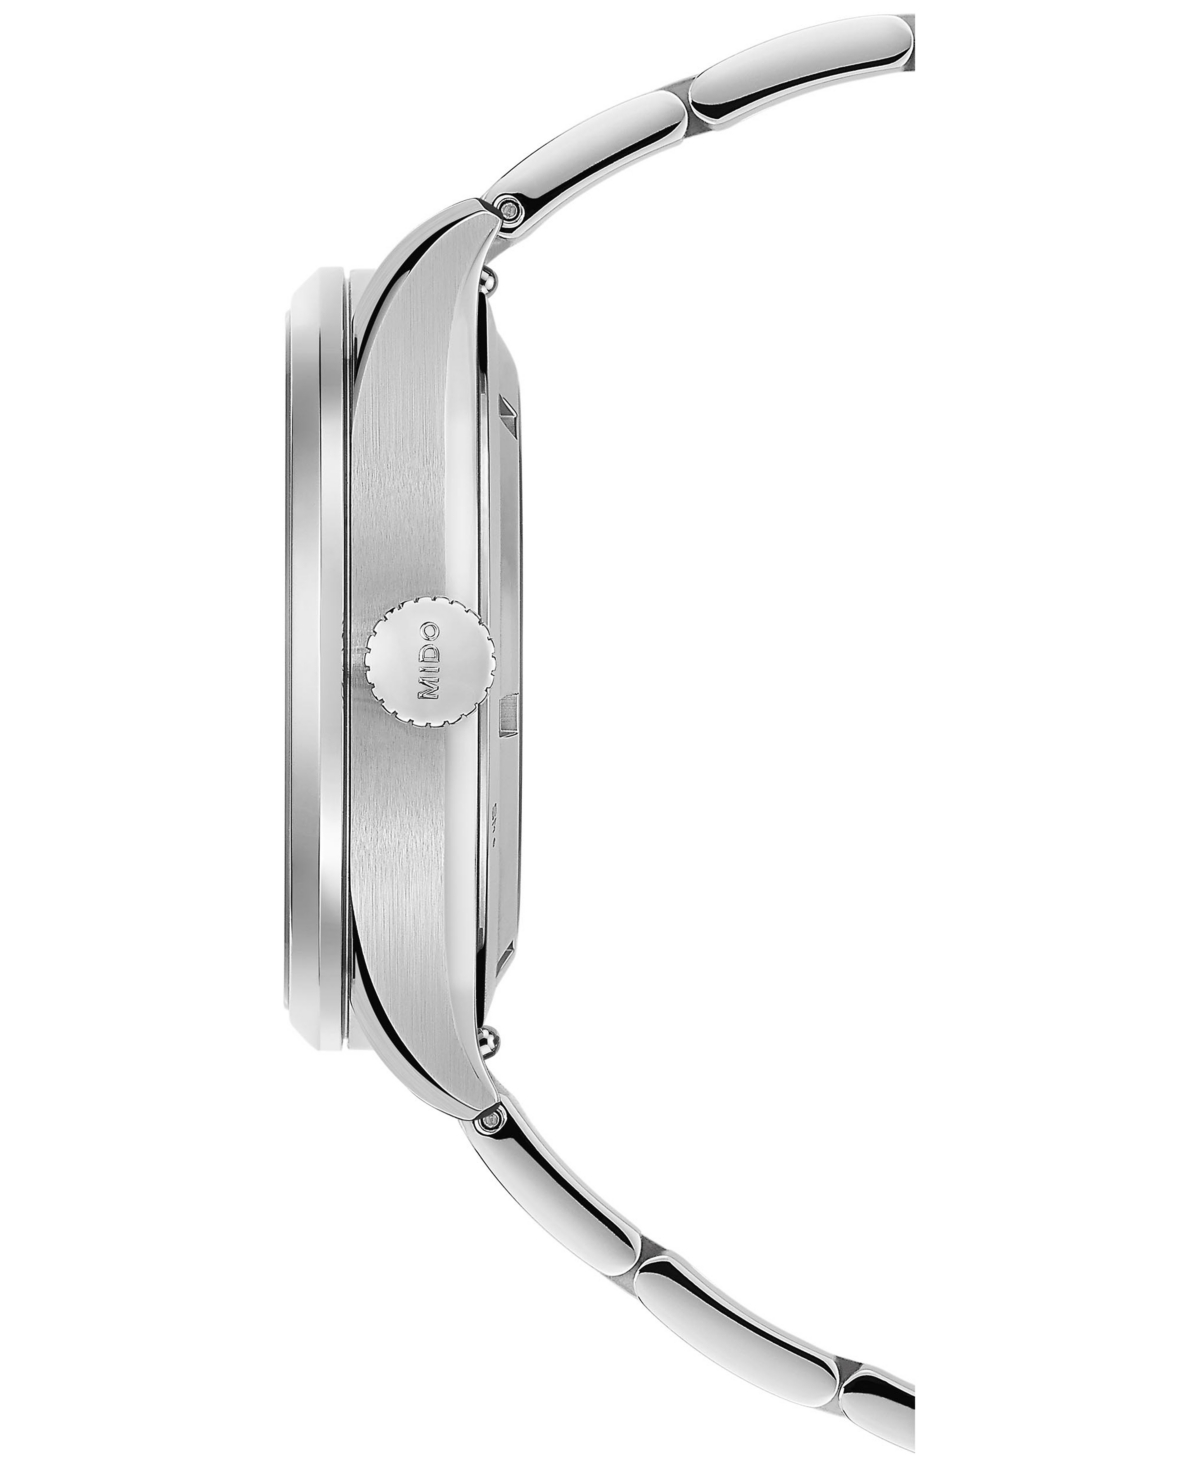 Shop Mido Men's Swiss Automatic Multifort Chronometer Stainless Steel Bracelet Watch 42mm In Green